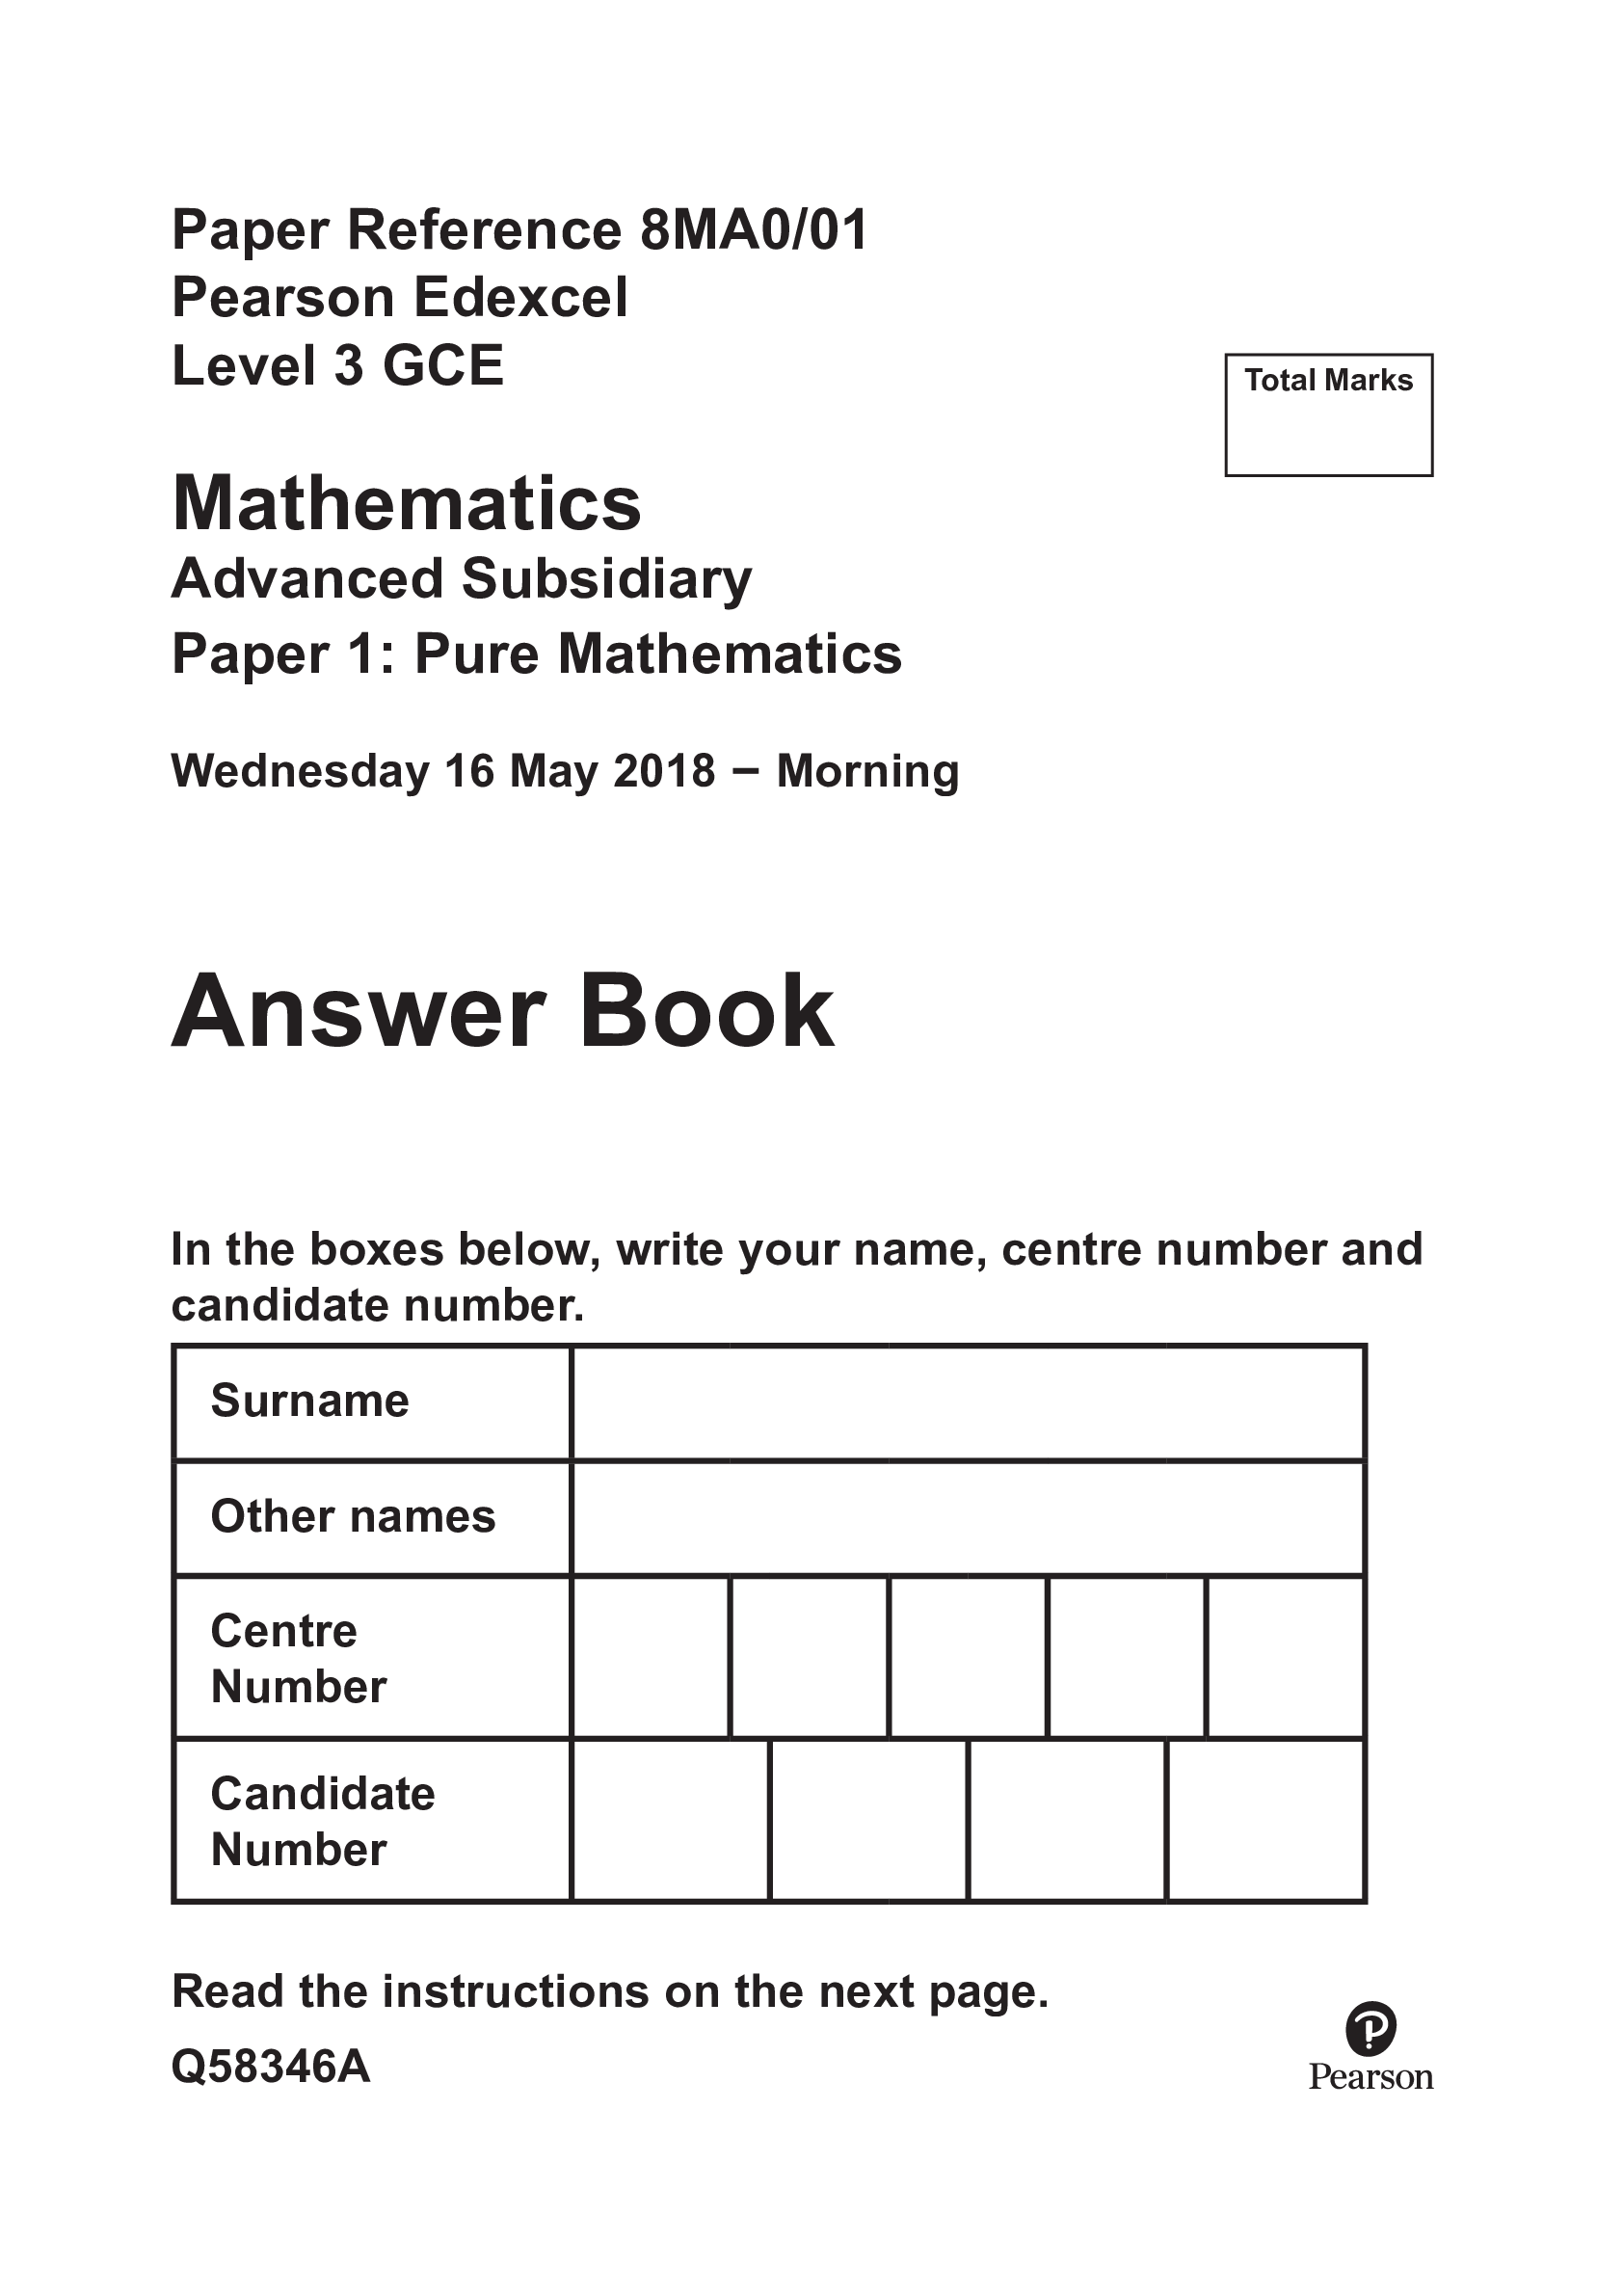 Mathematics Advanced Subsidiary Paper 1: Answer Book